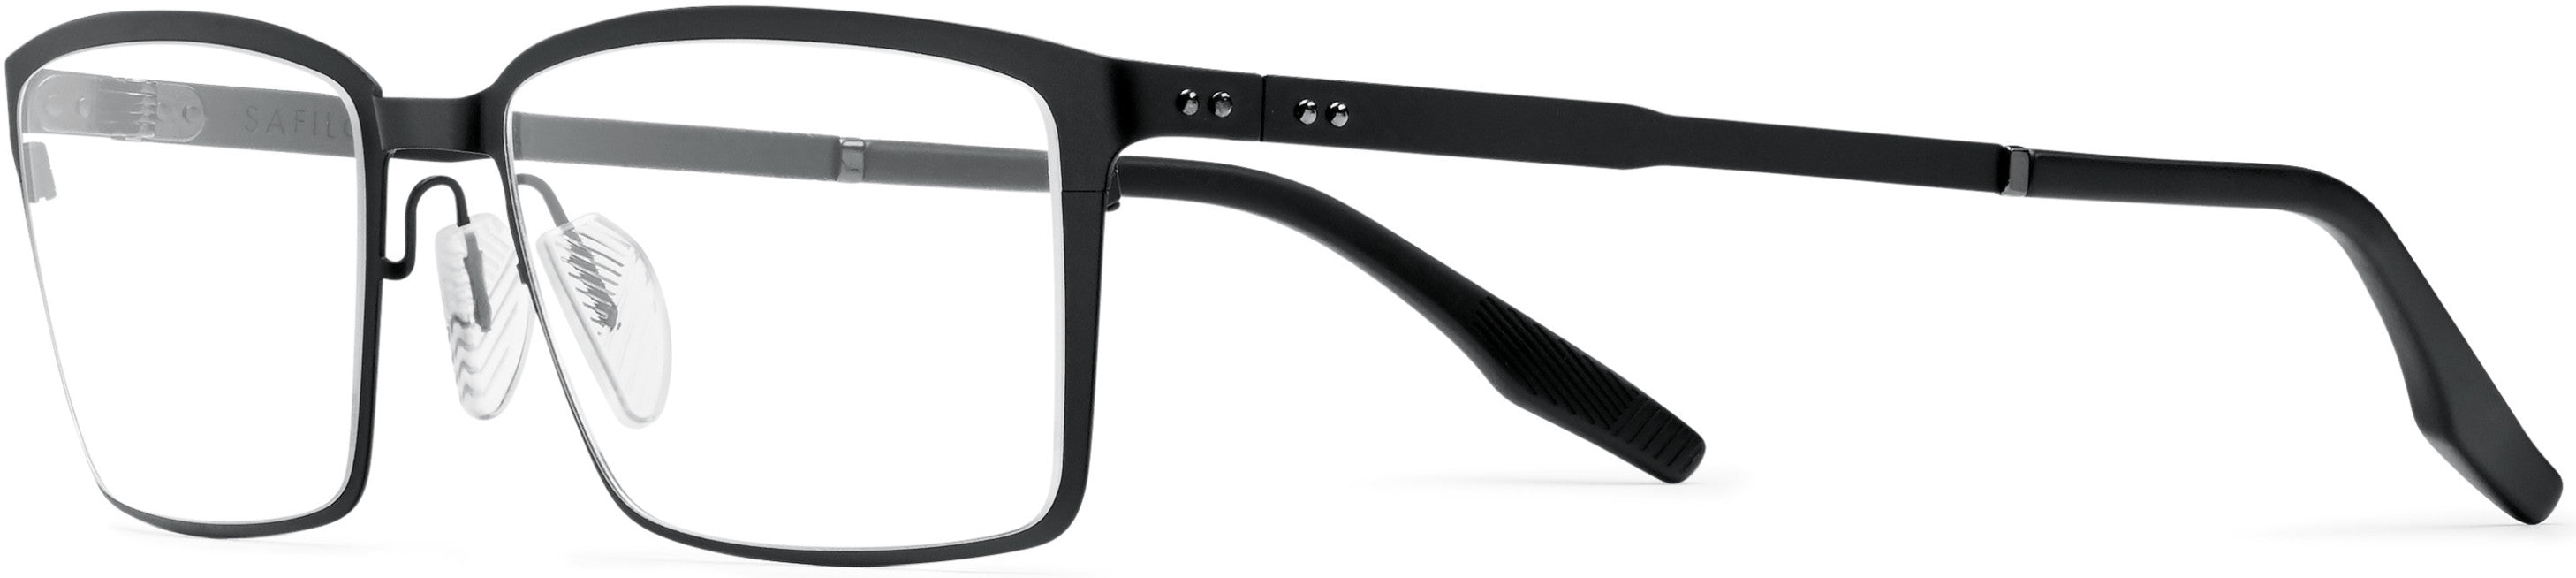 Safilo 2.0 Lamina 02 Rectangular Eyeglasses 0003-0003  Matte Black (00 Demo Lens)